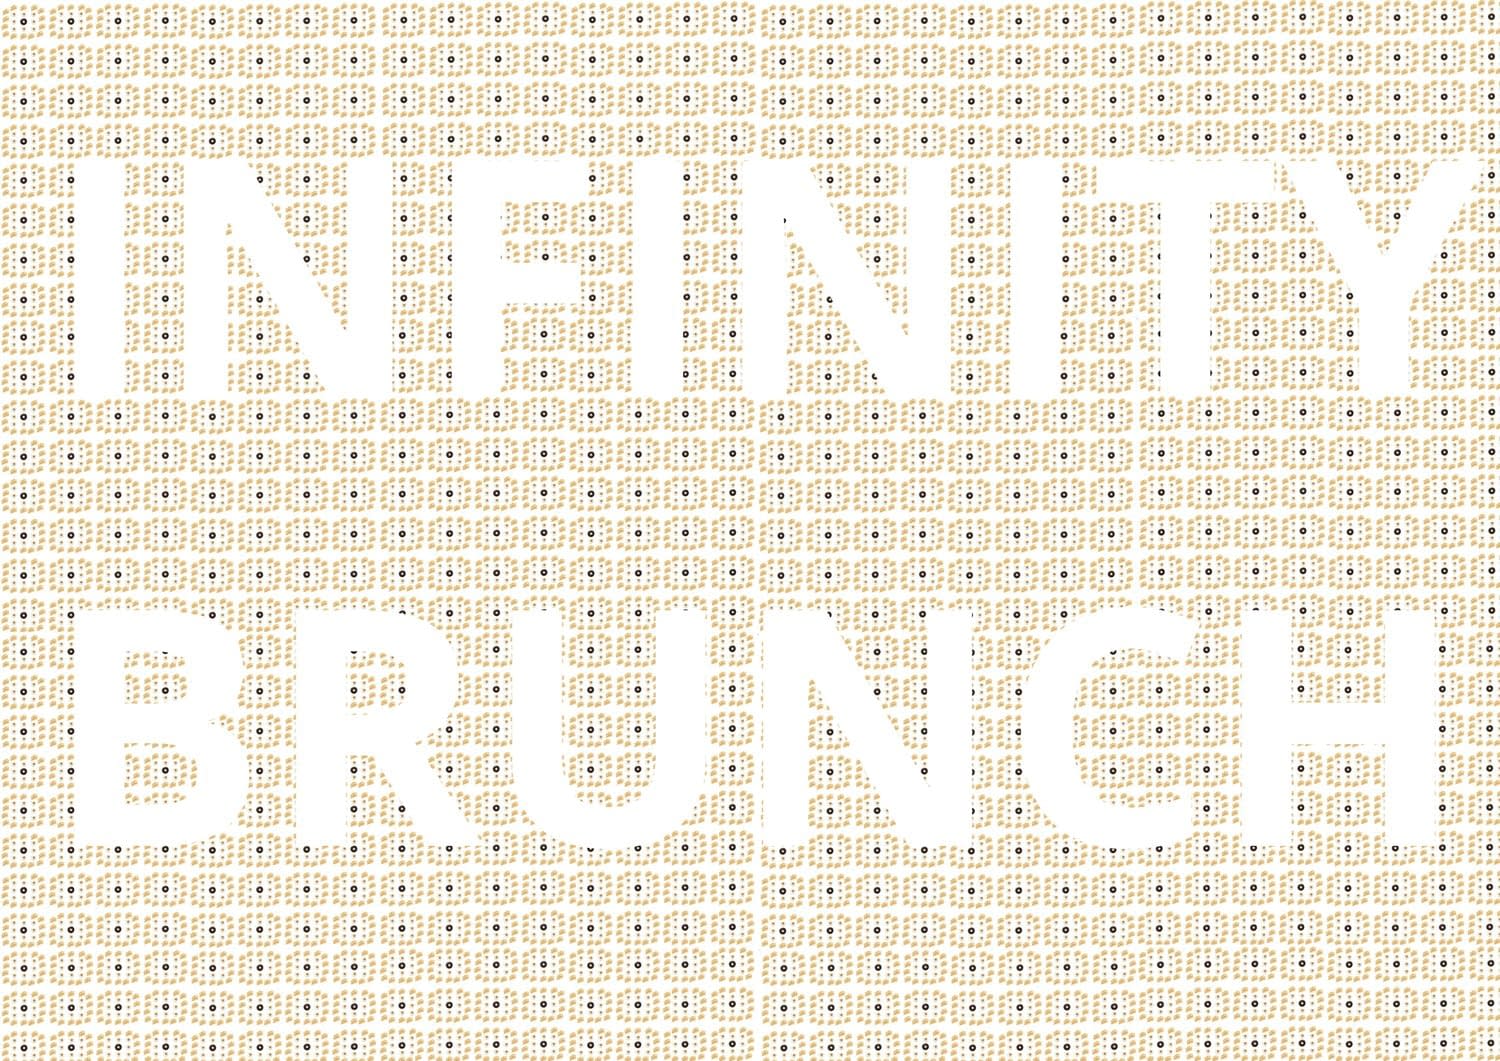 Infinity Brunch Poster